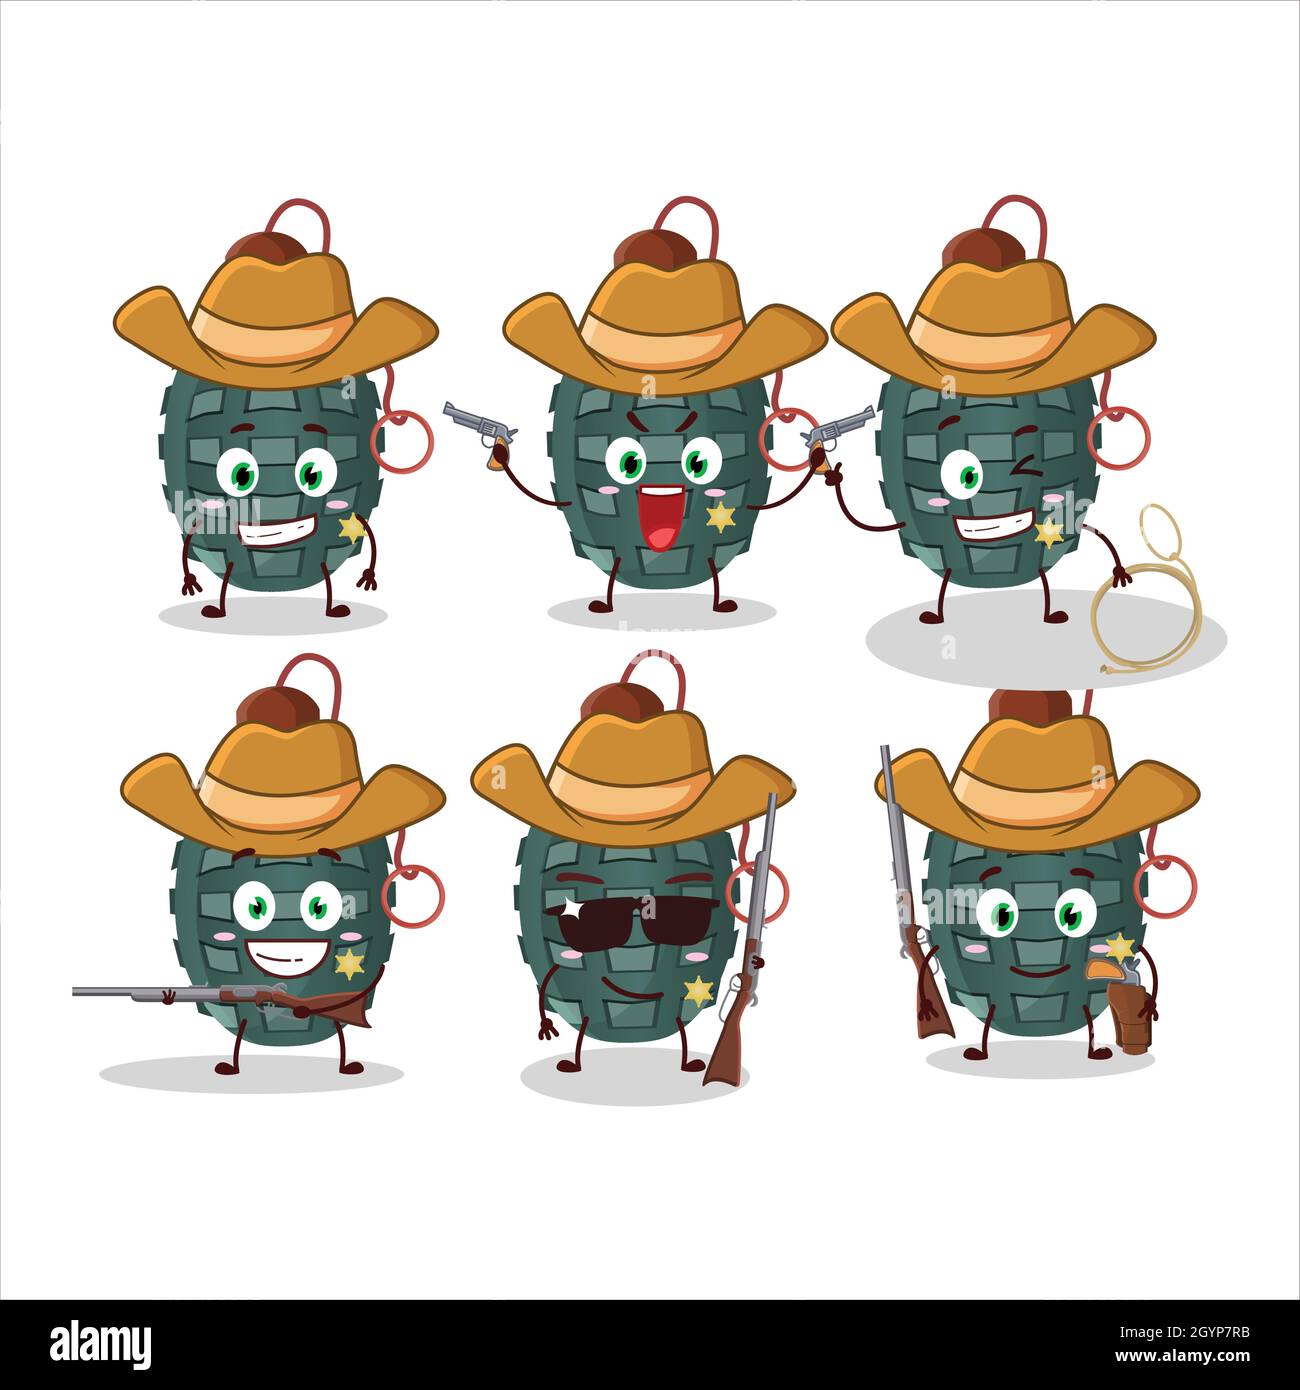 Cool cowboy granade firecracker cartoon character with a cute hat. Vector illustration Stock Vector